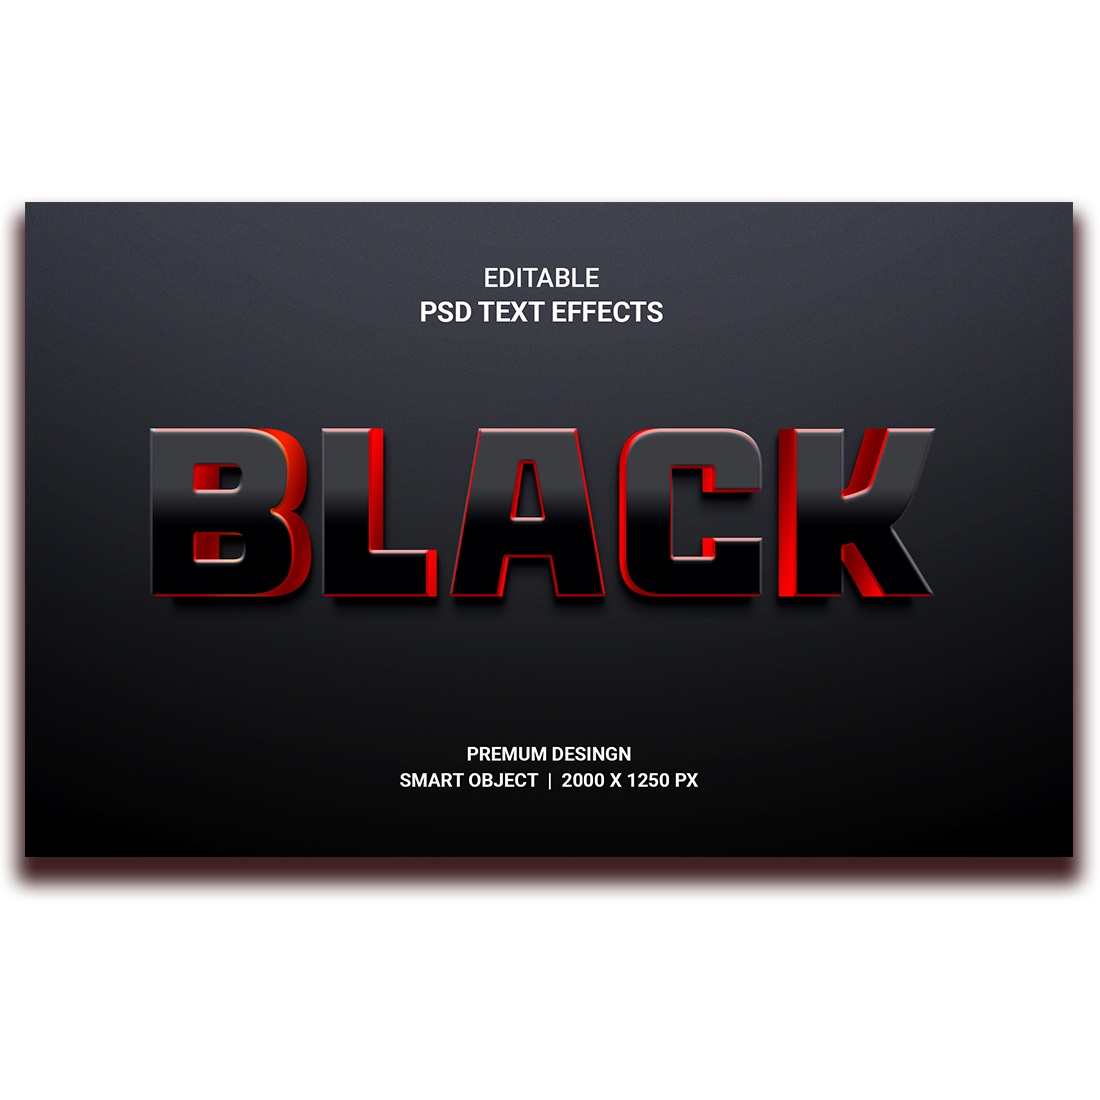 Editable Black 3D Text Effect PSD cover image.